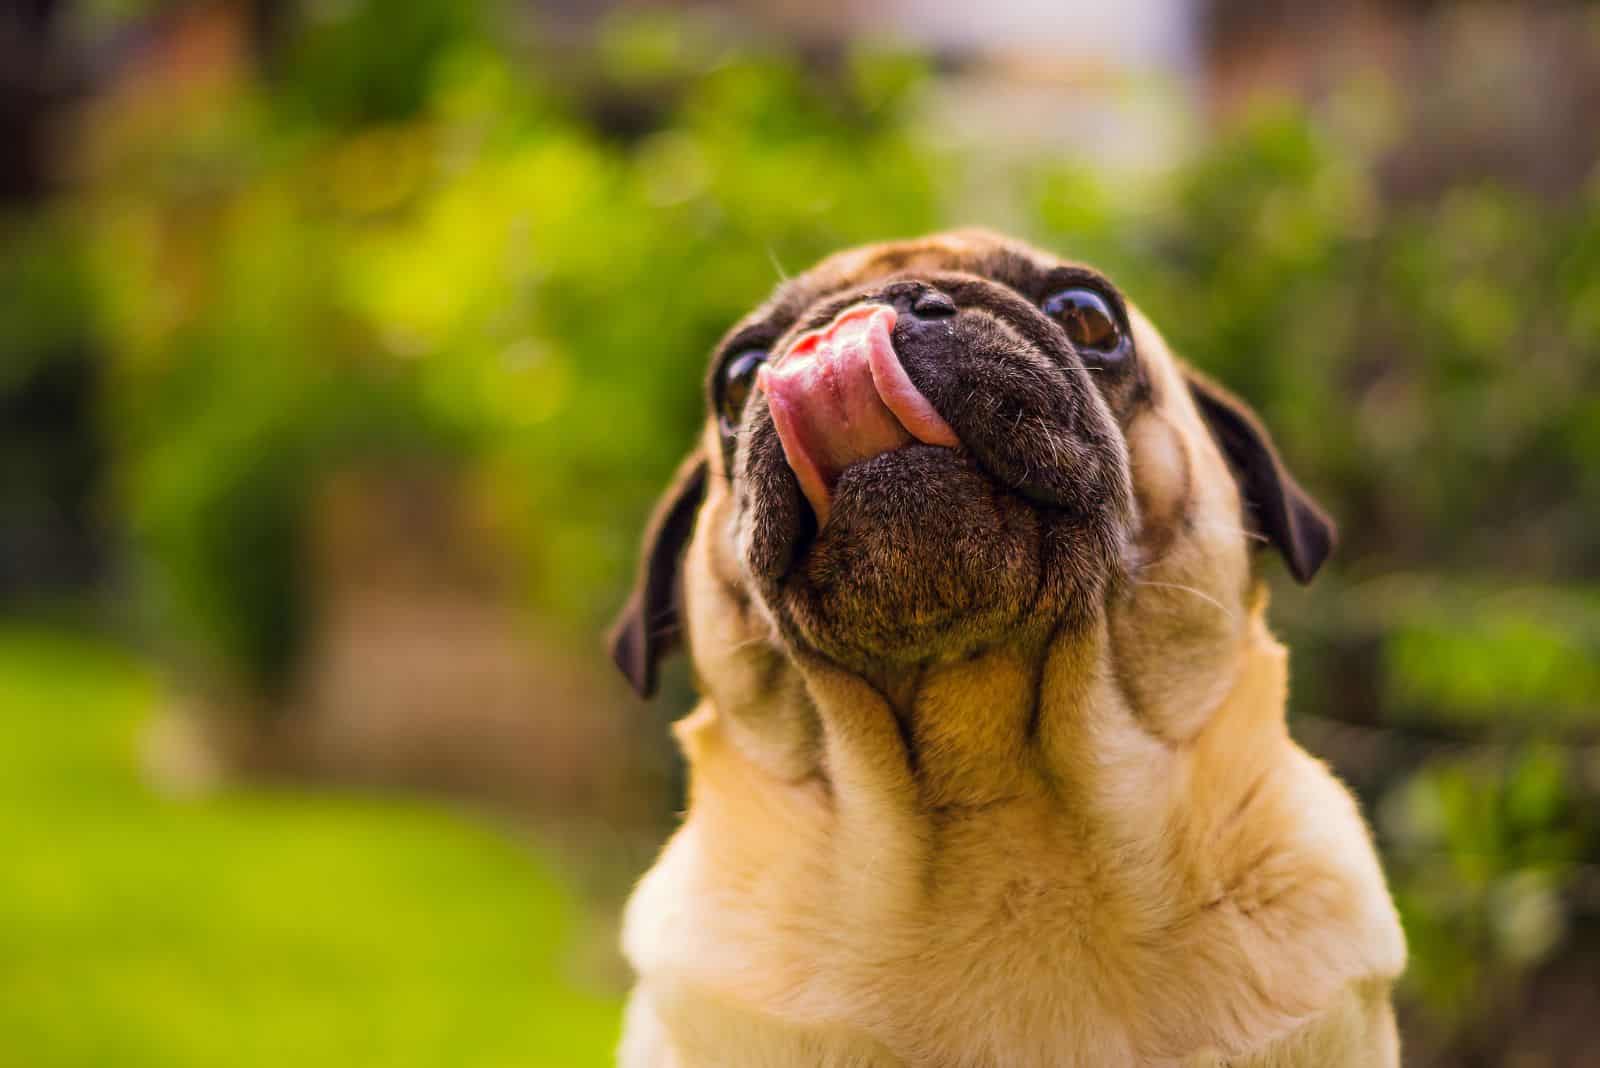 A pug licks the air outdoors